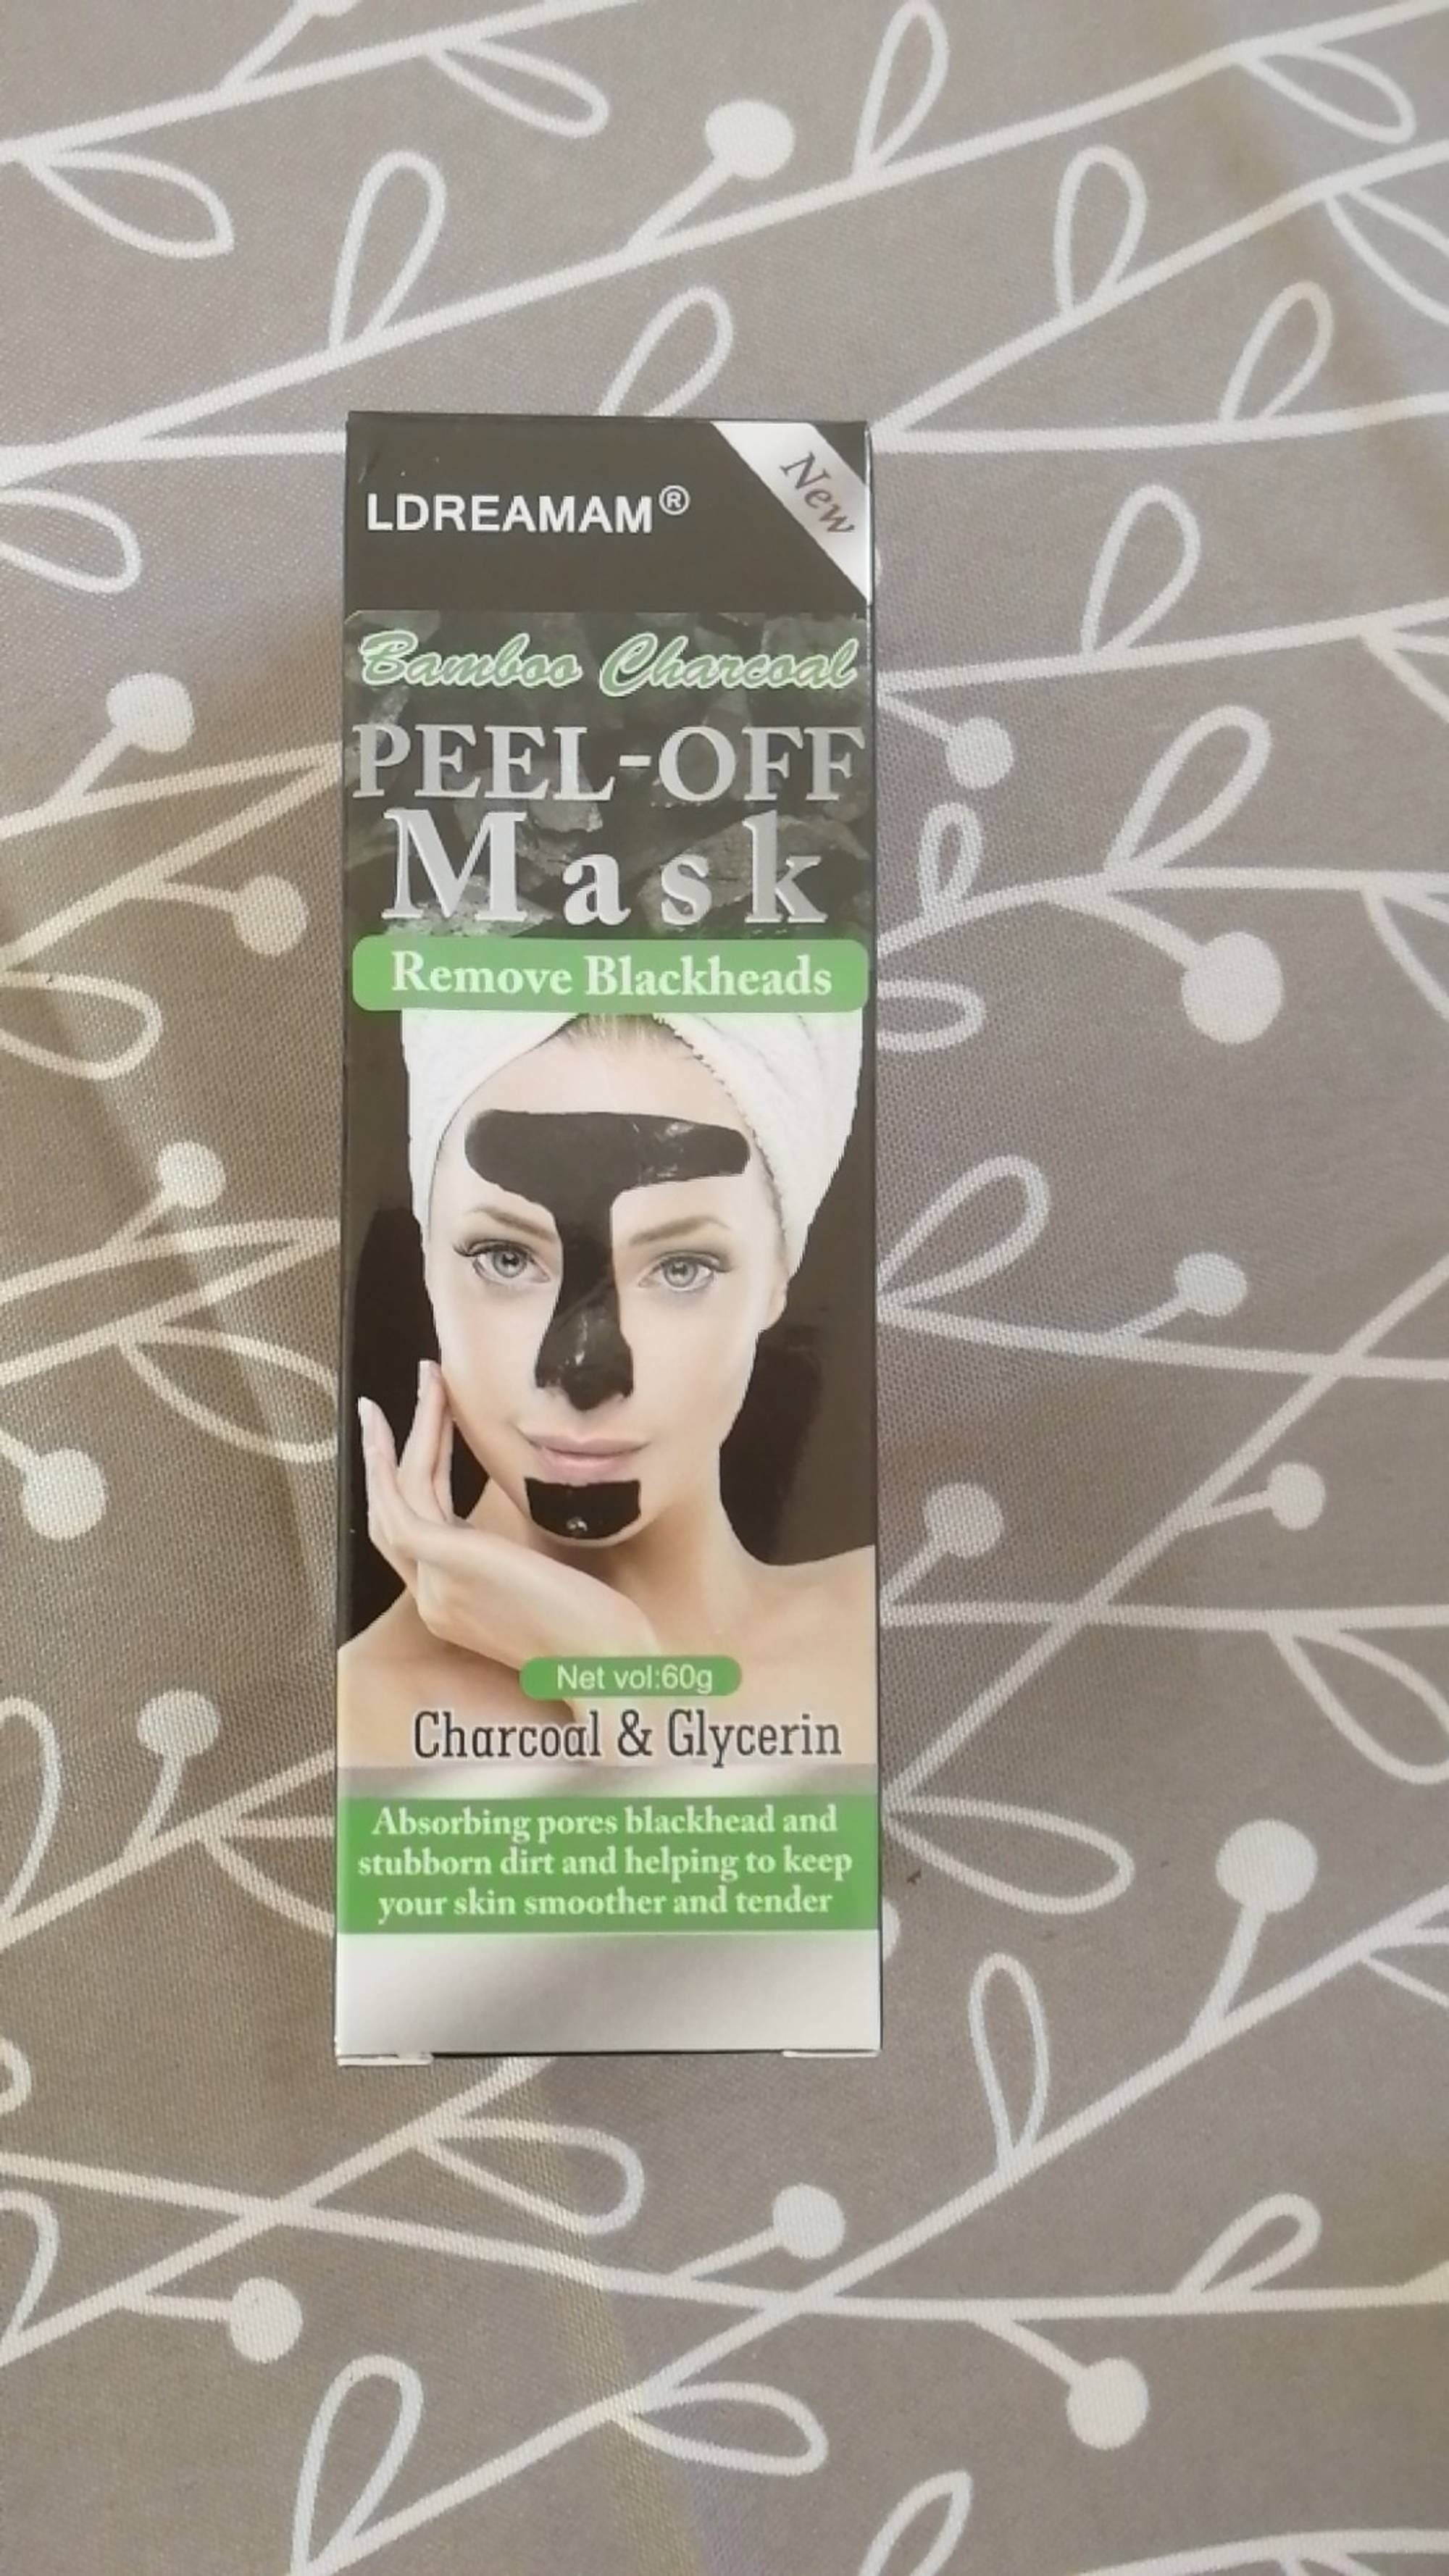 LDREAMAM - Bamboo charcoal - Peel-off mask